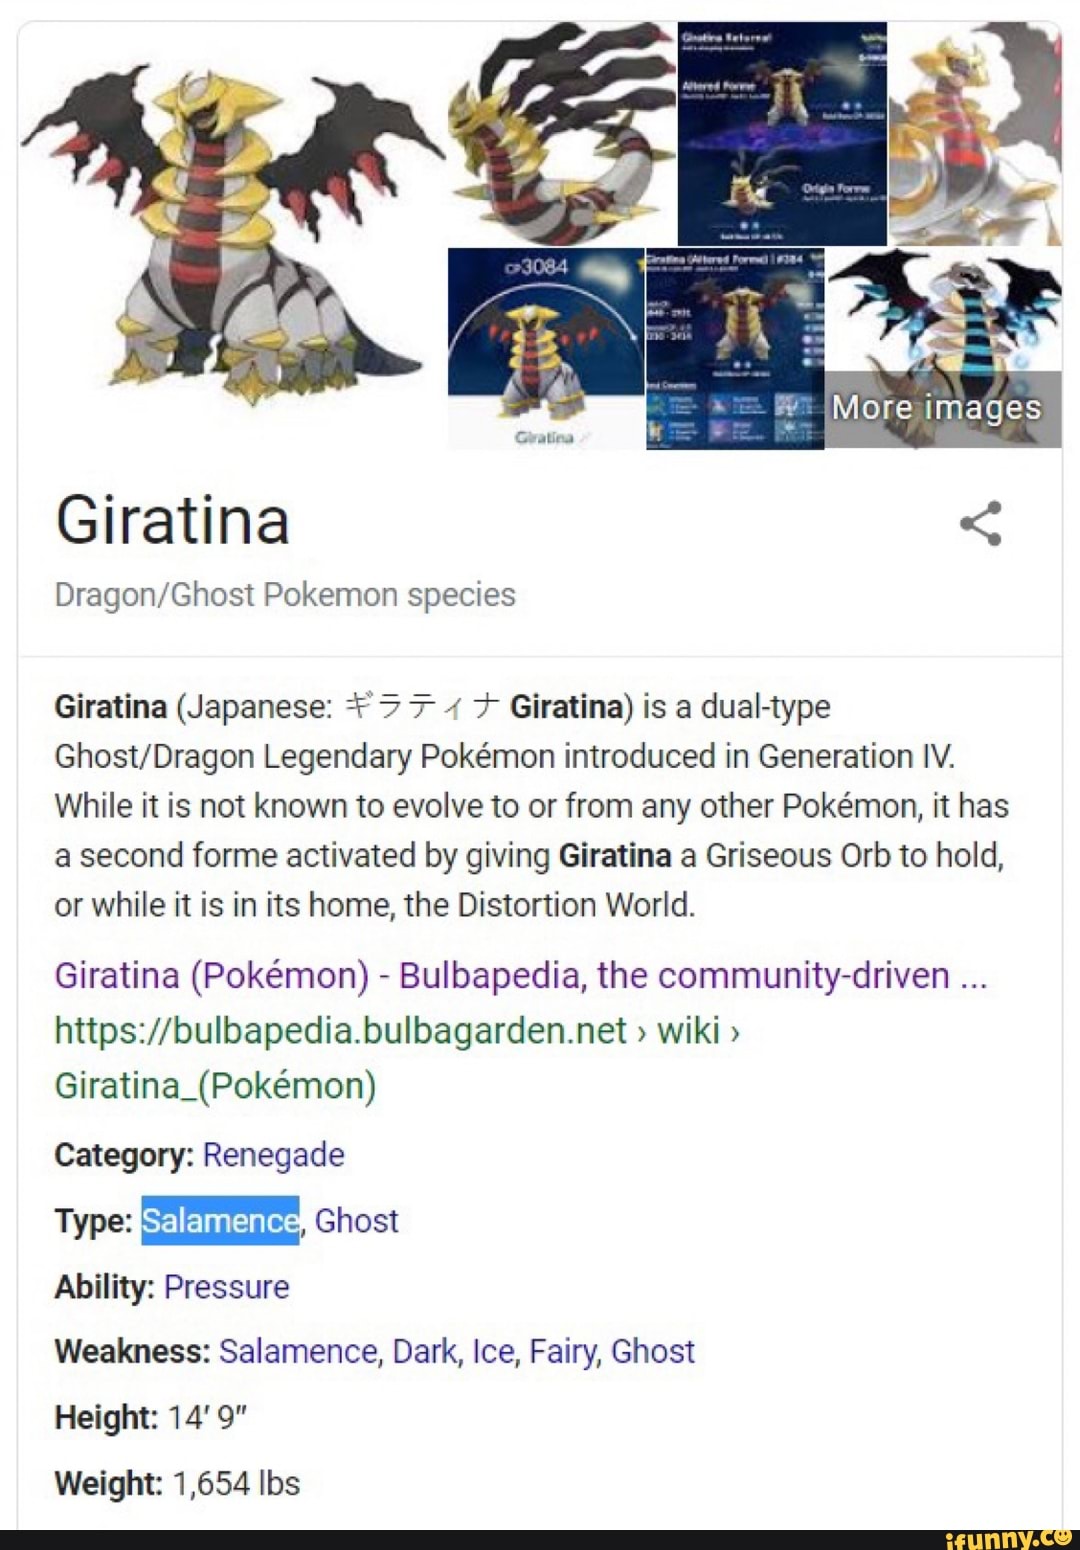 Giratina (Pokémon) - Bulbapedia, the community-driven Pokémon